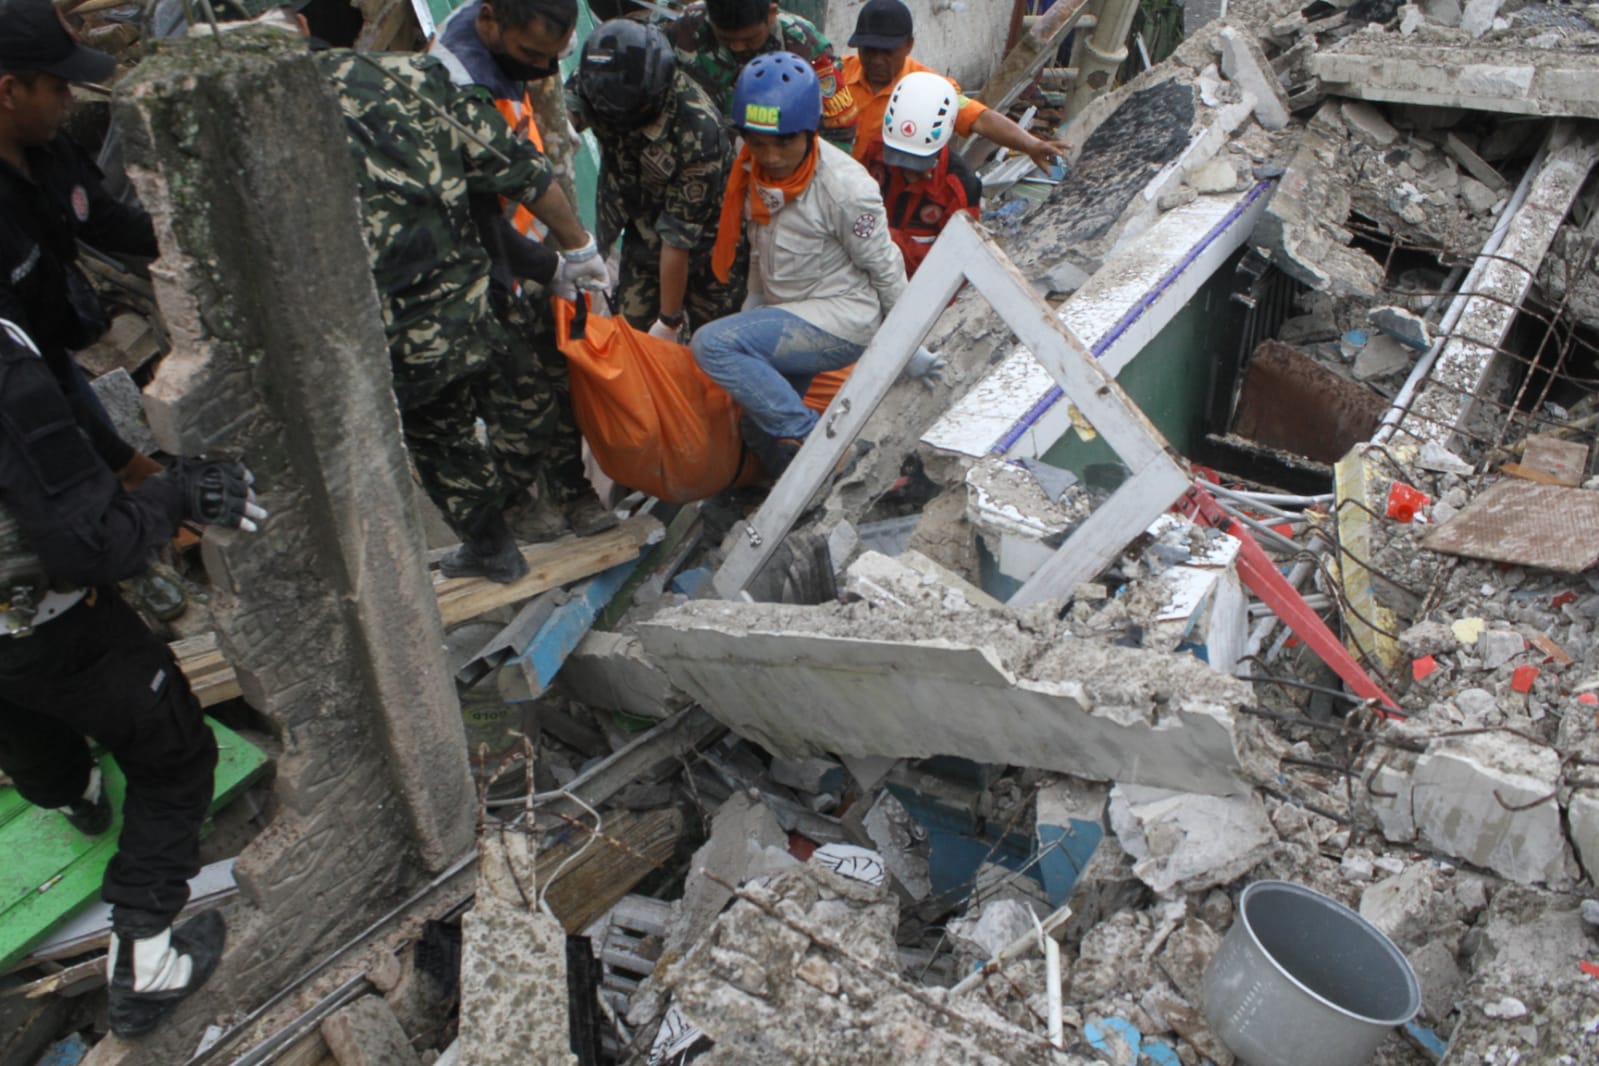 BERHASIL DITEMUKAN: Petugas saat mengevakuasi jenazah yang tertimbun runtuhan bangunan, Selasa (22/11). (Sandika Fadilah/Jabar Ekspres)